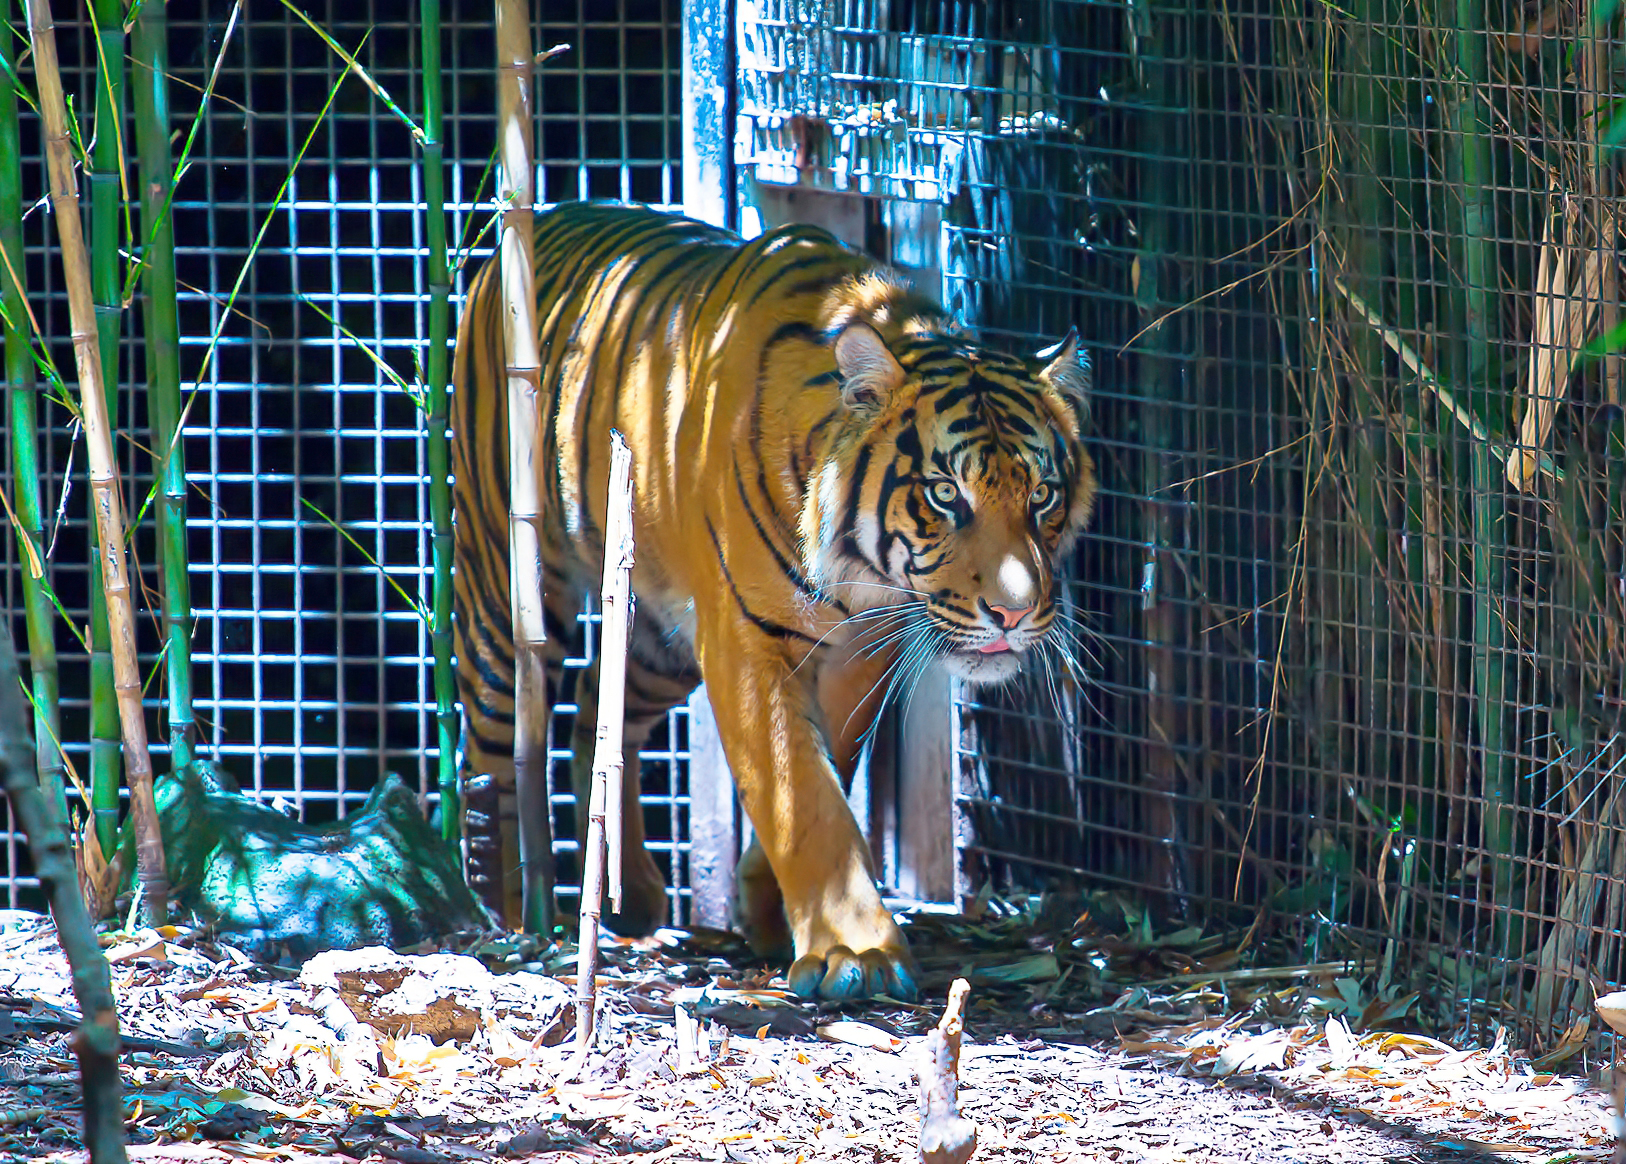 Sumatran tiger photo